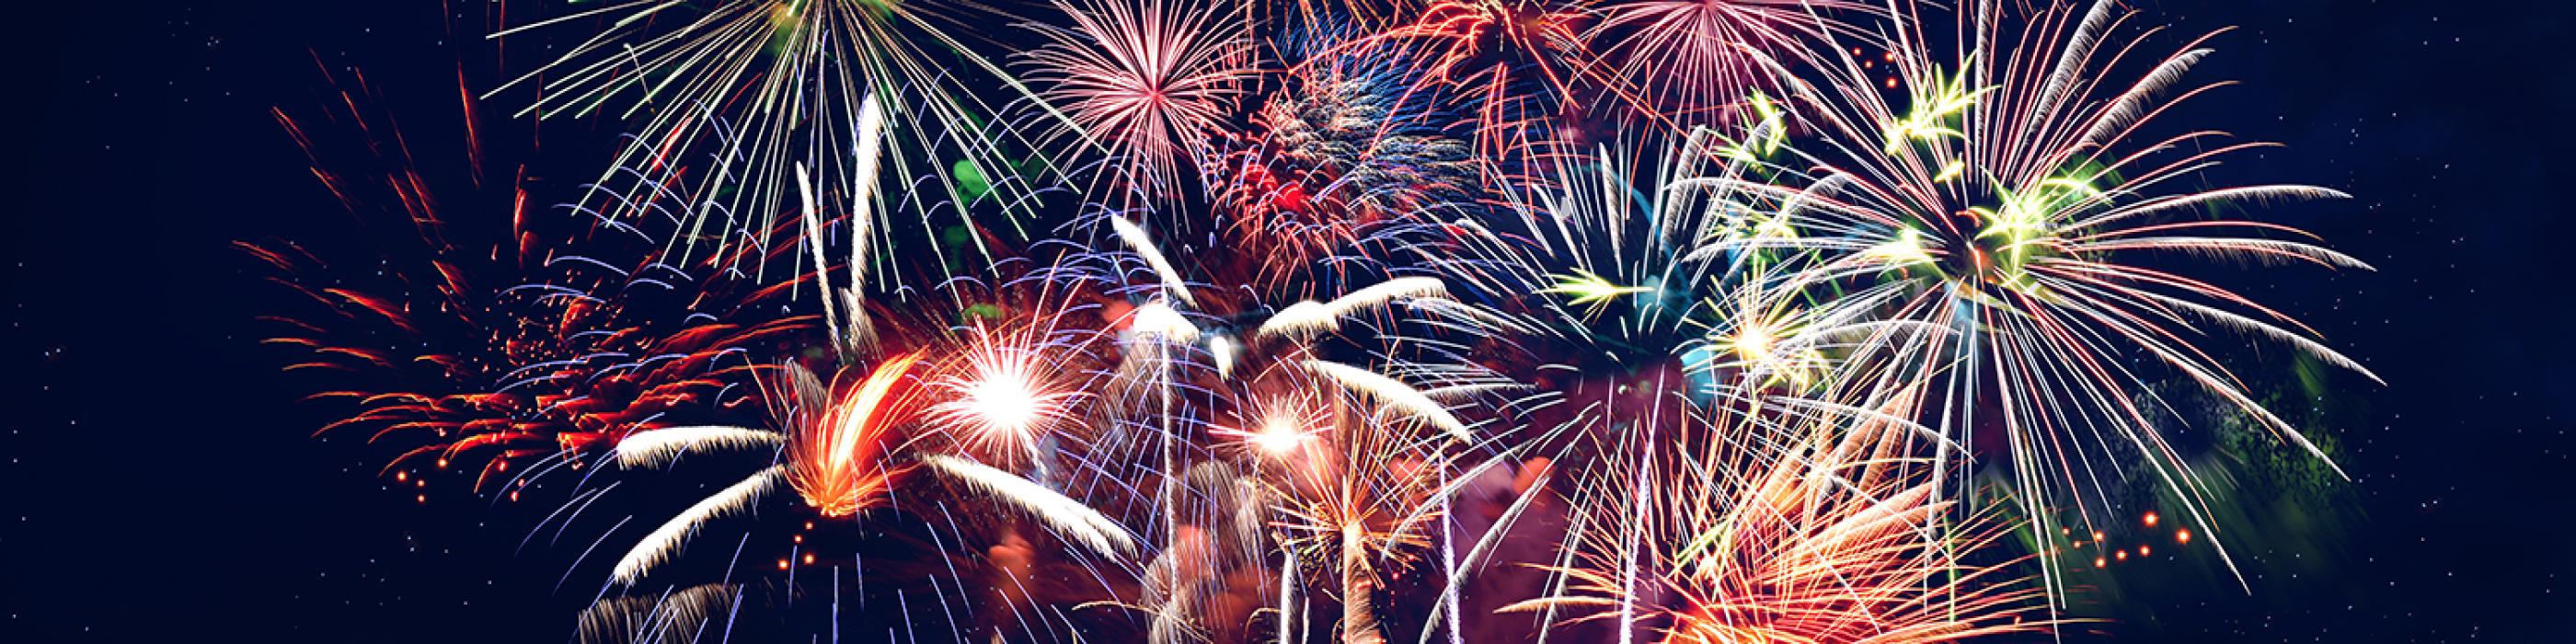 1500-fireworks-AdobeStock_90990567.jpg